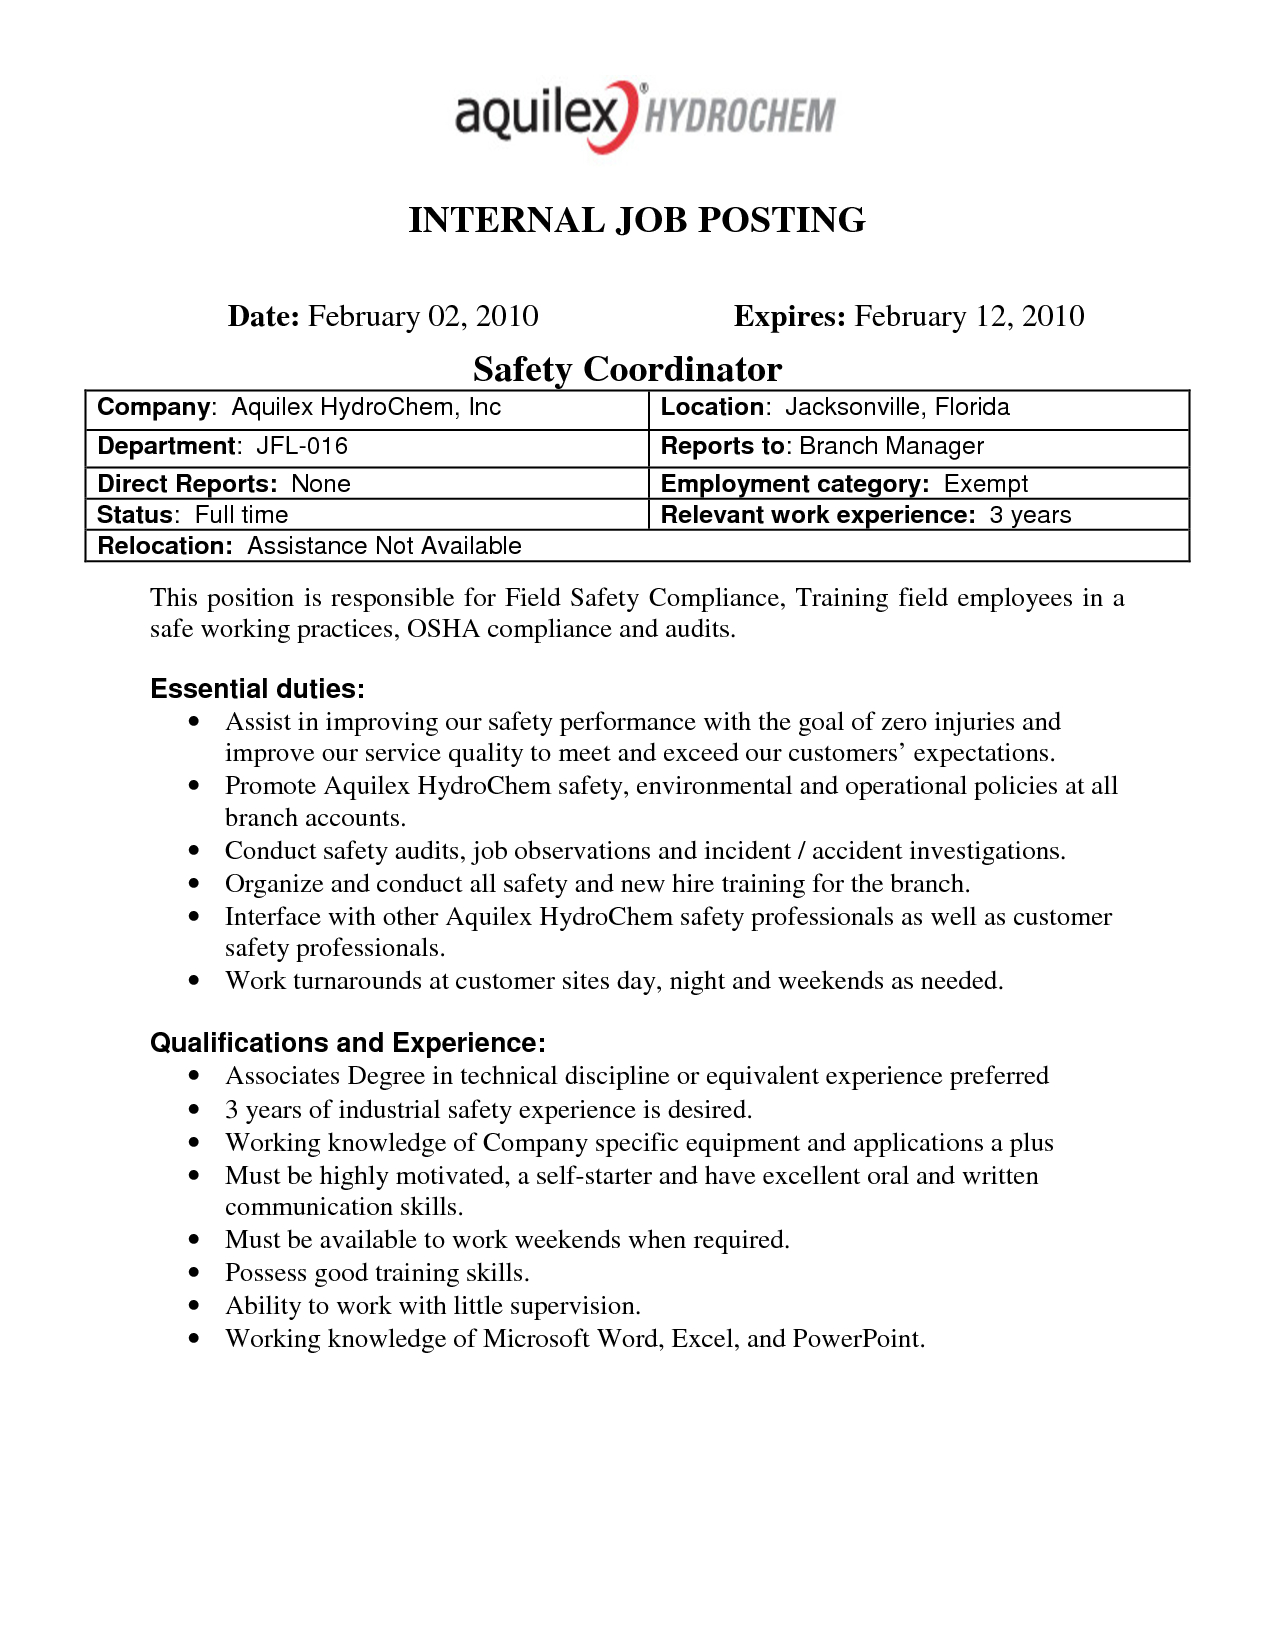 Best Photos Of Internal Job Posting Template Word - Resume Regarding Internal Job Posting Template Word